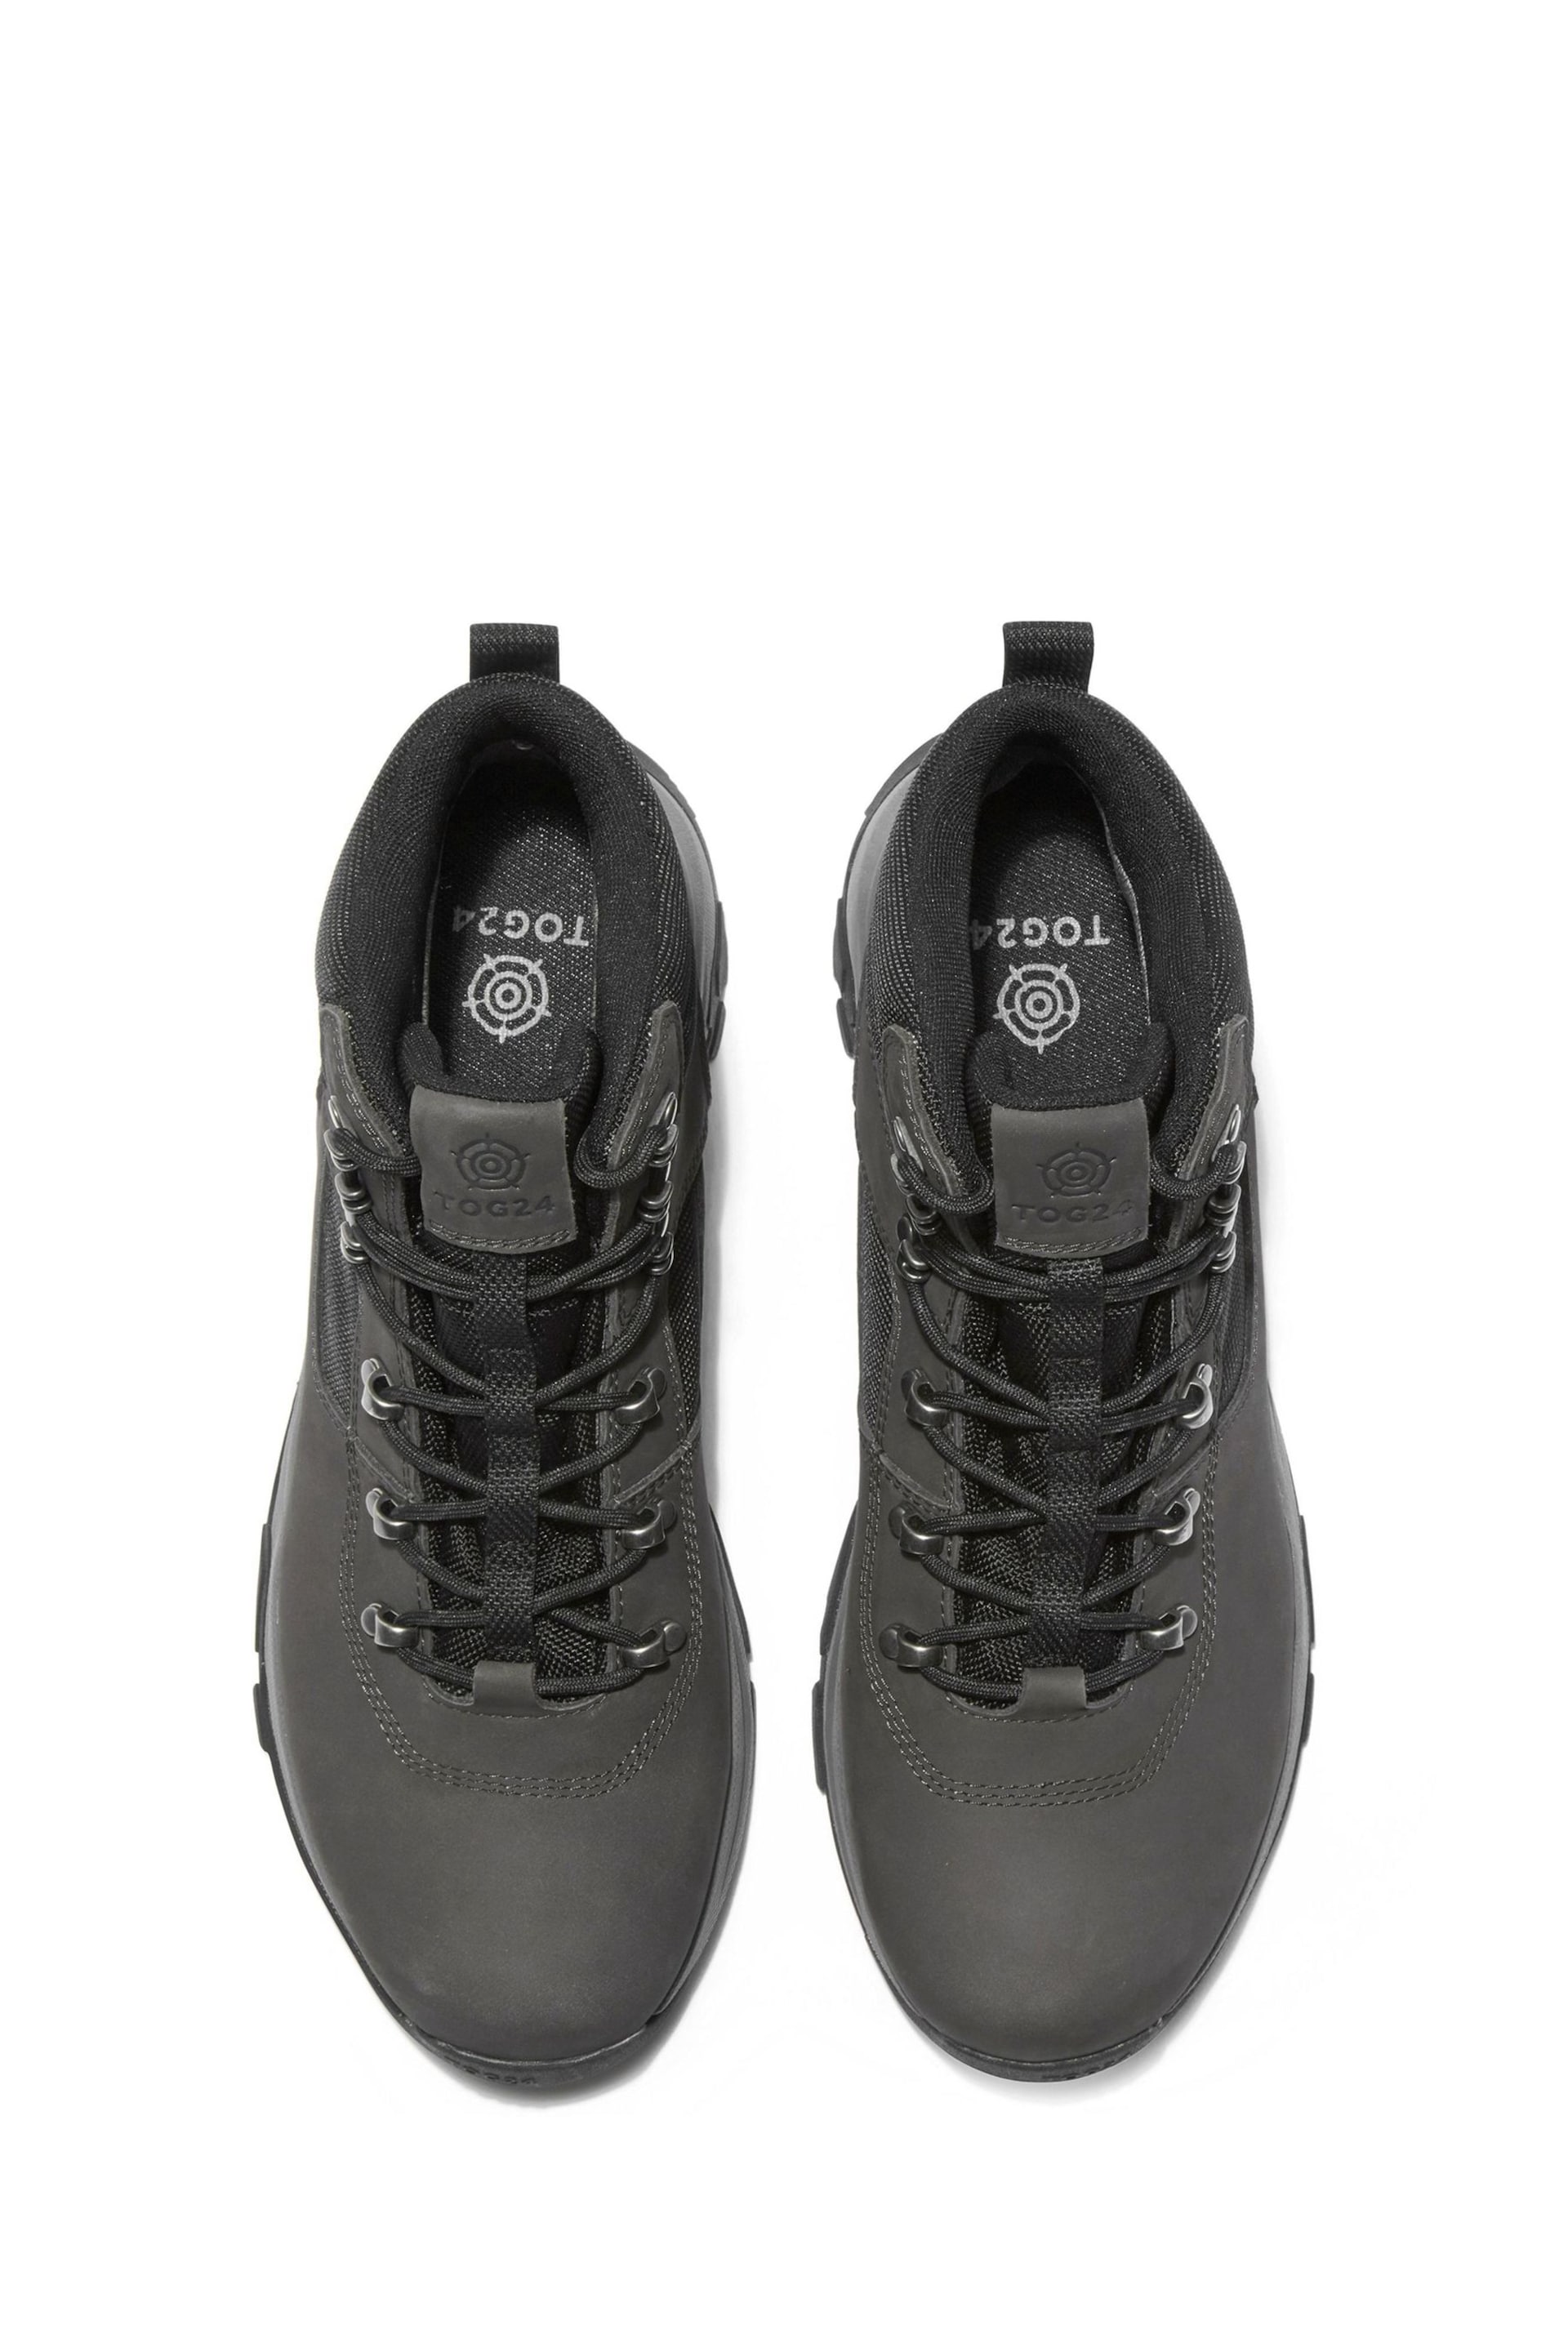 Tog 24 Grey Tundra Walking Boots - Image 5 of 7